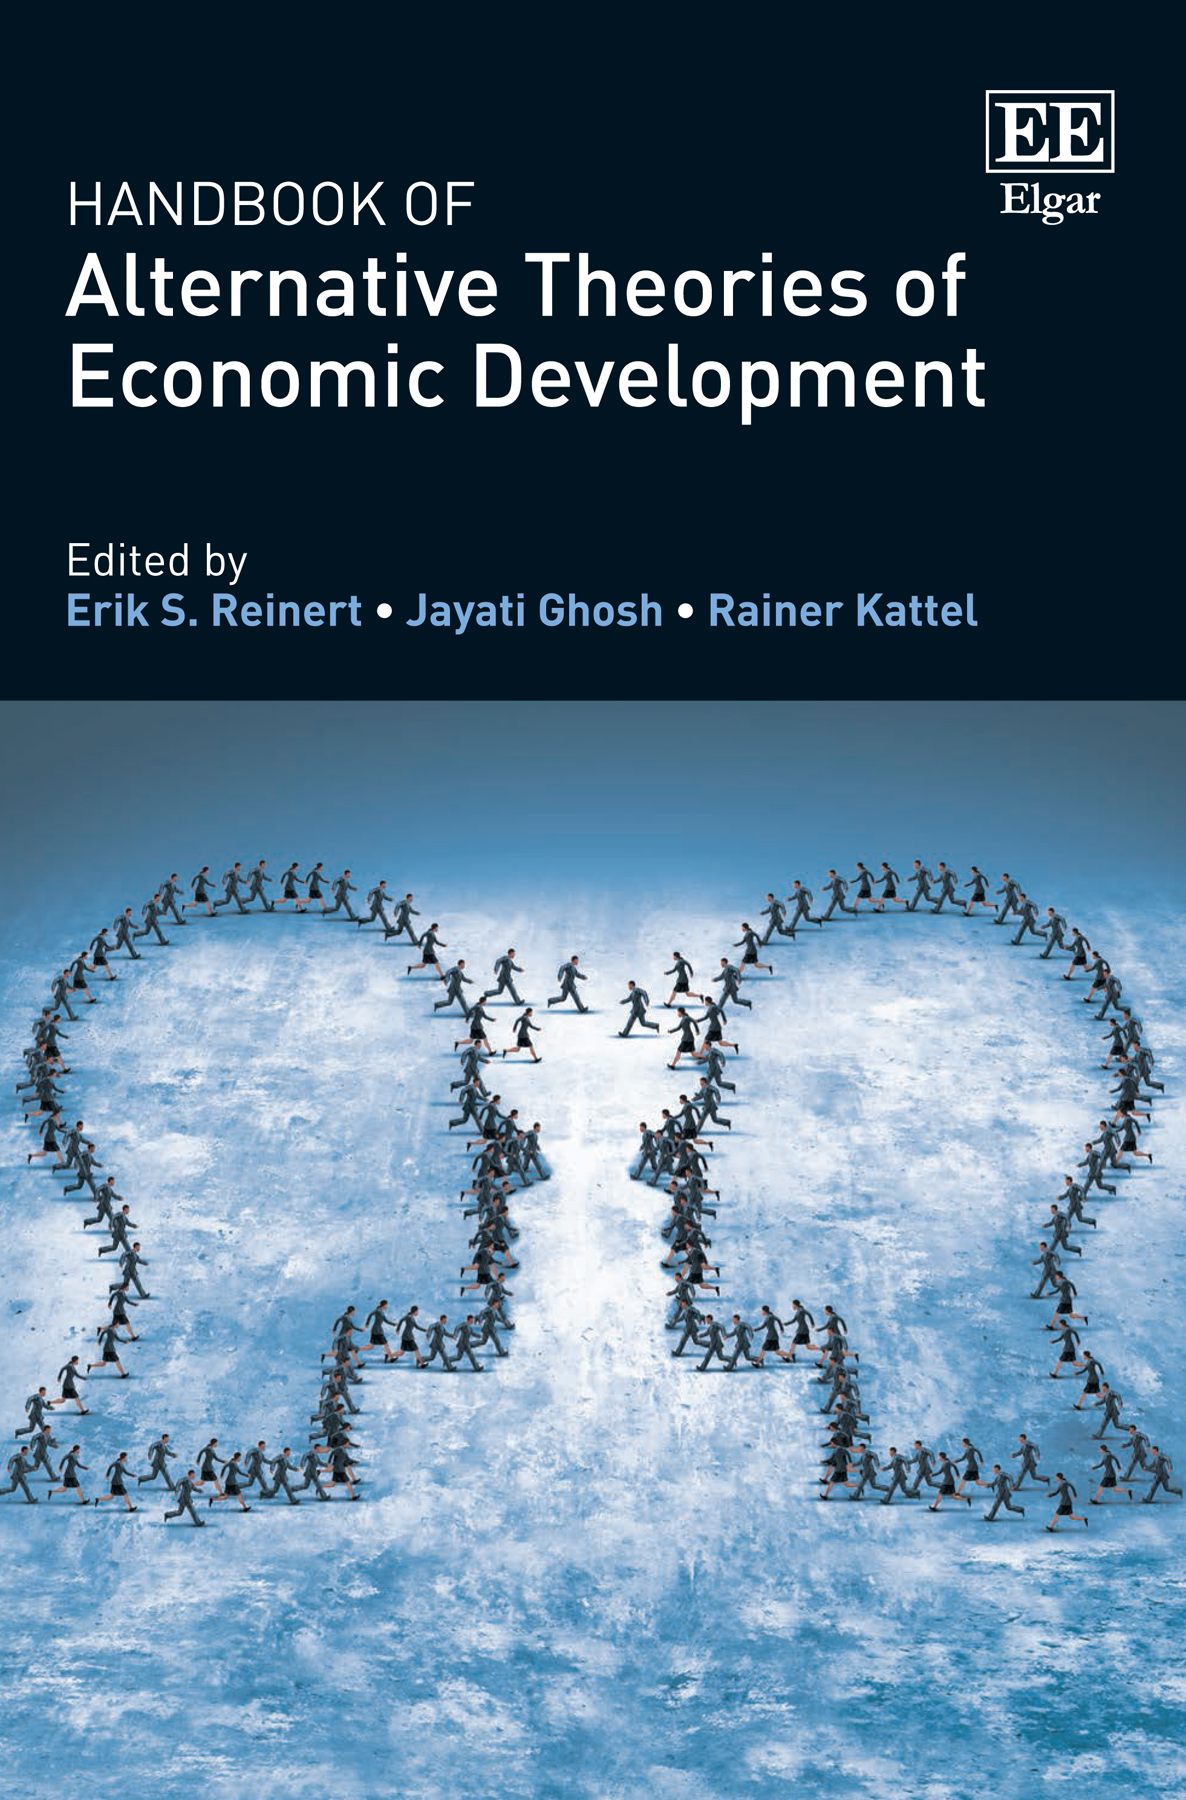 Handbook of Alternative Theories of Economic Development